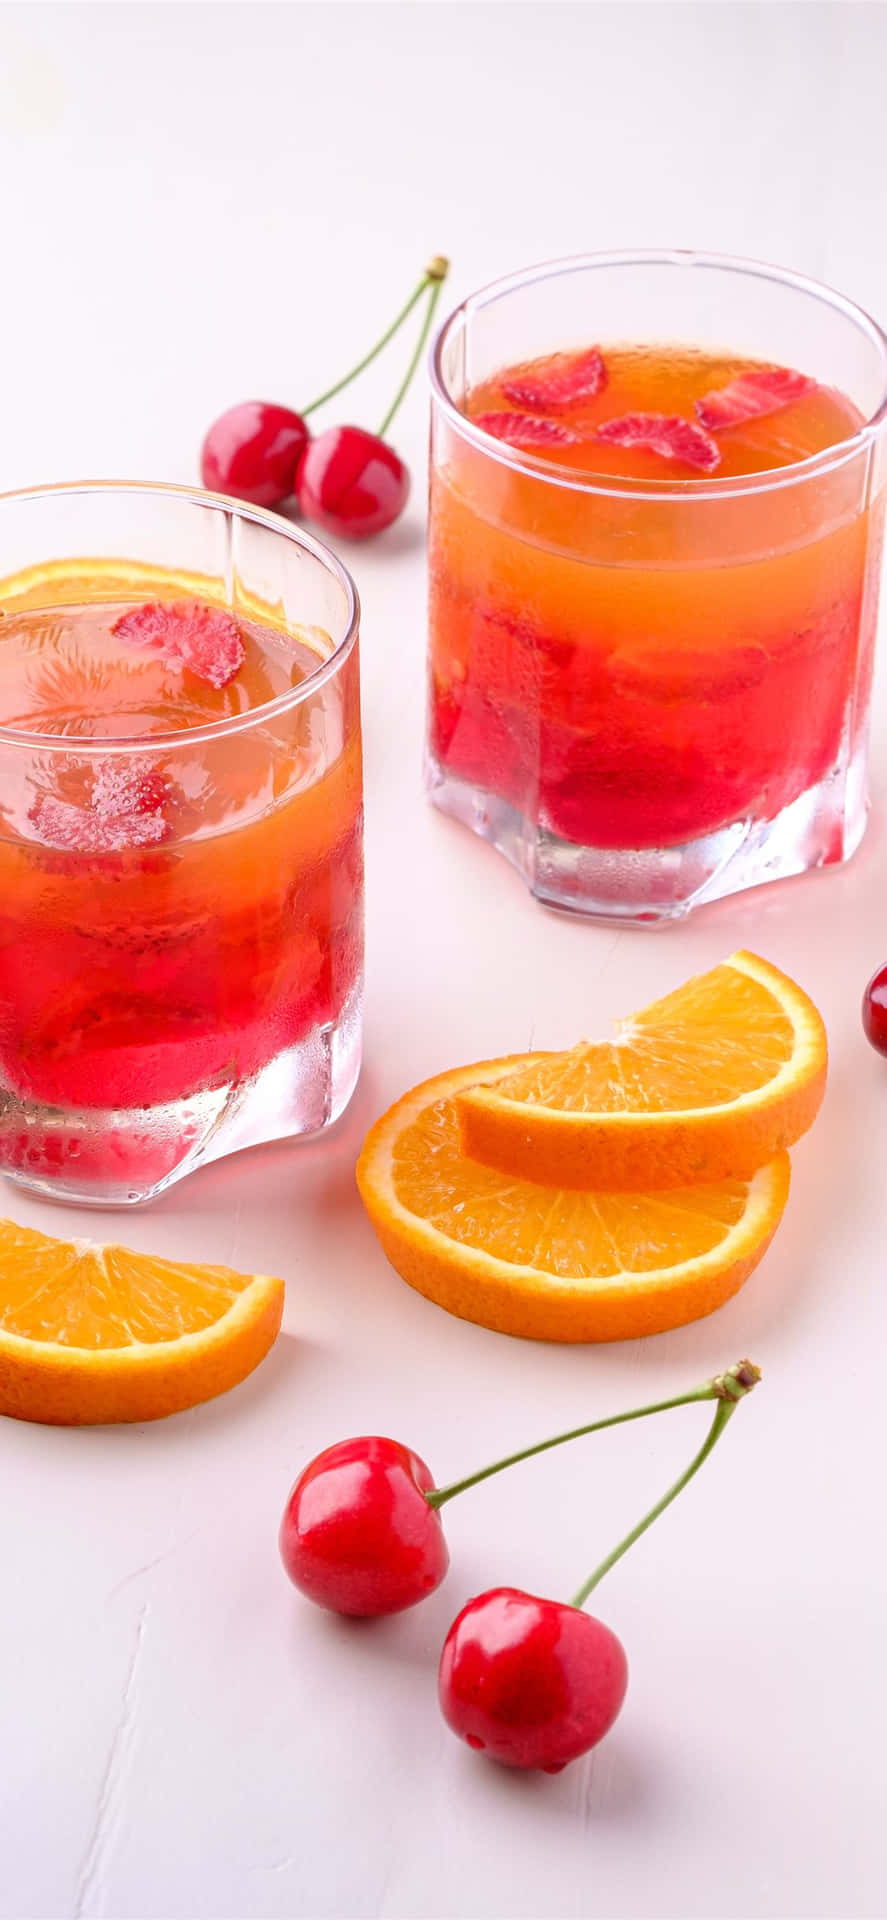 A Glass Of Orange Juice